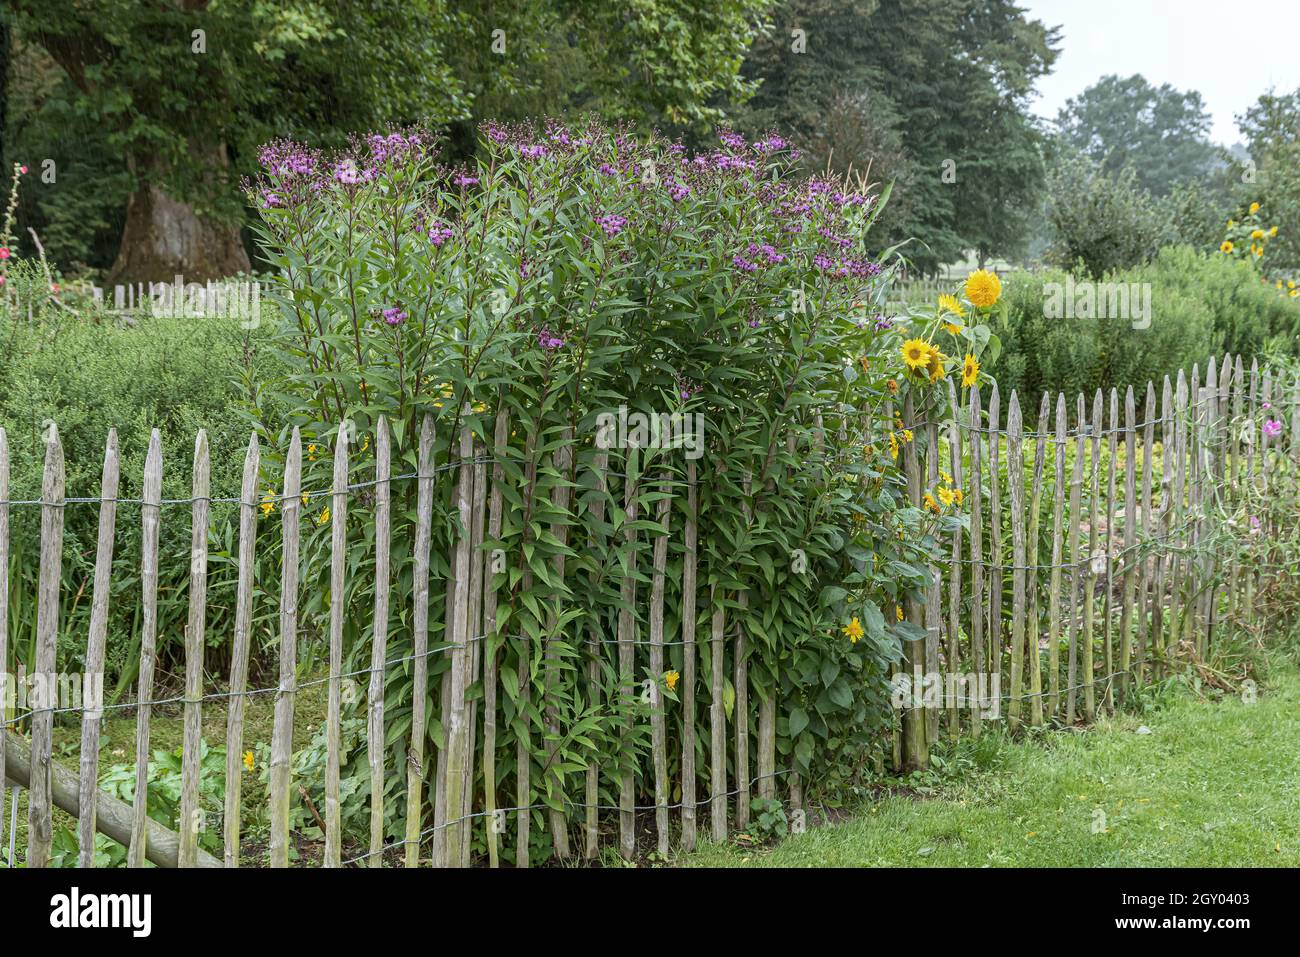 Akrkansas Vernonia (Vernonia crinita), blooming at a garden fence, Germany Stock Photo